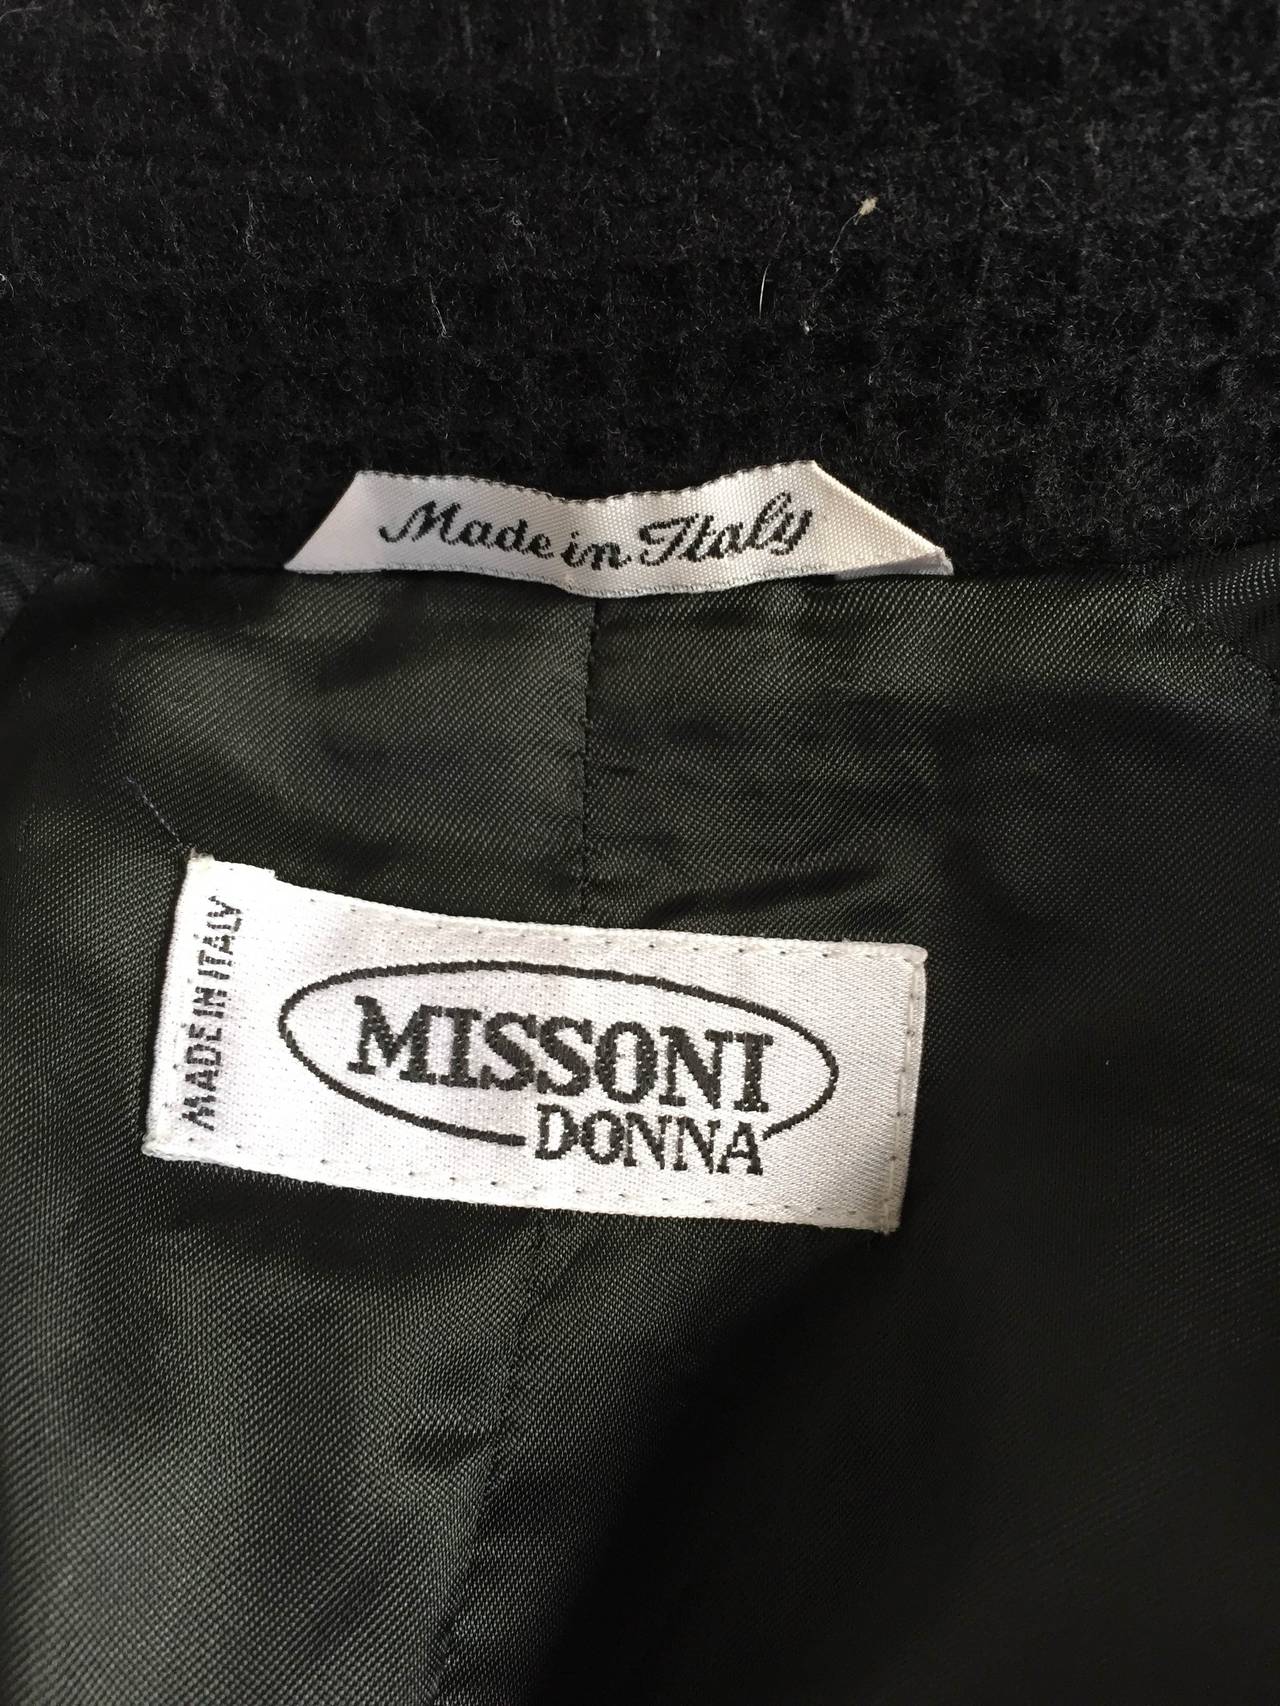 Missoni Donna 90s wool coat size 8. 4